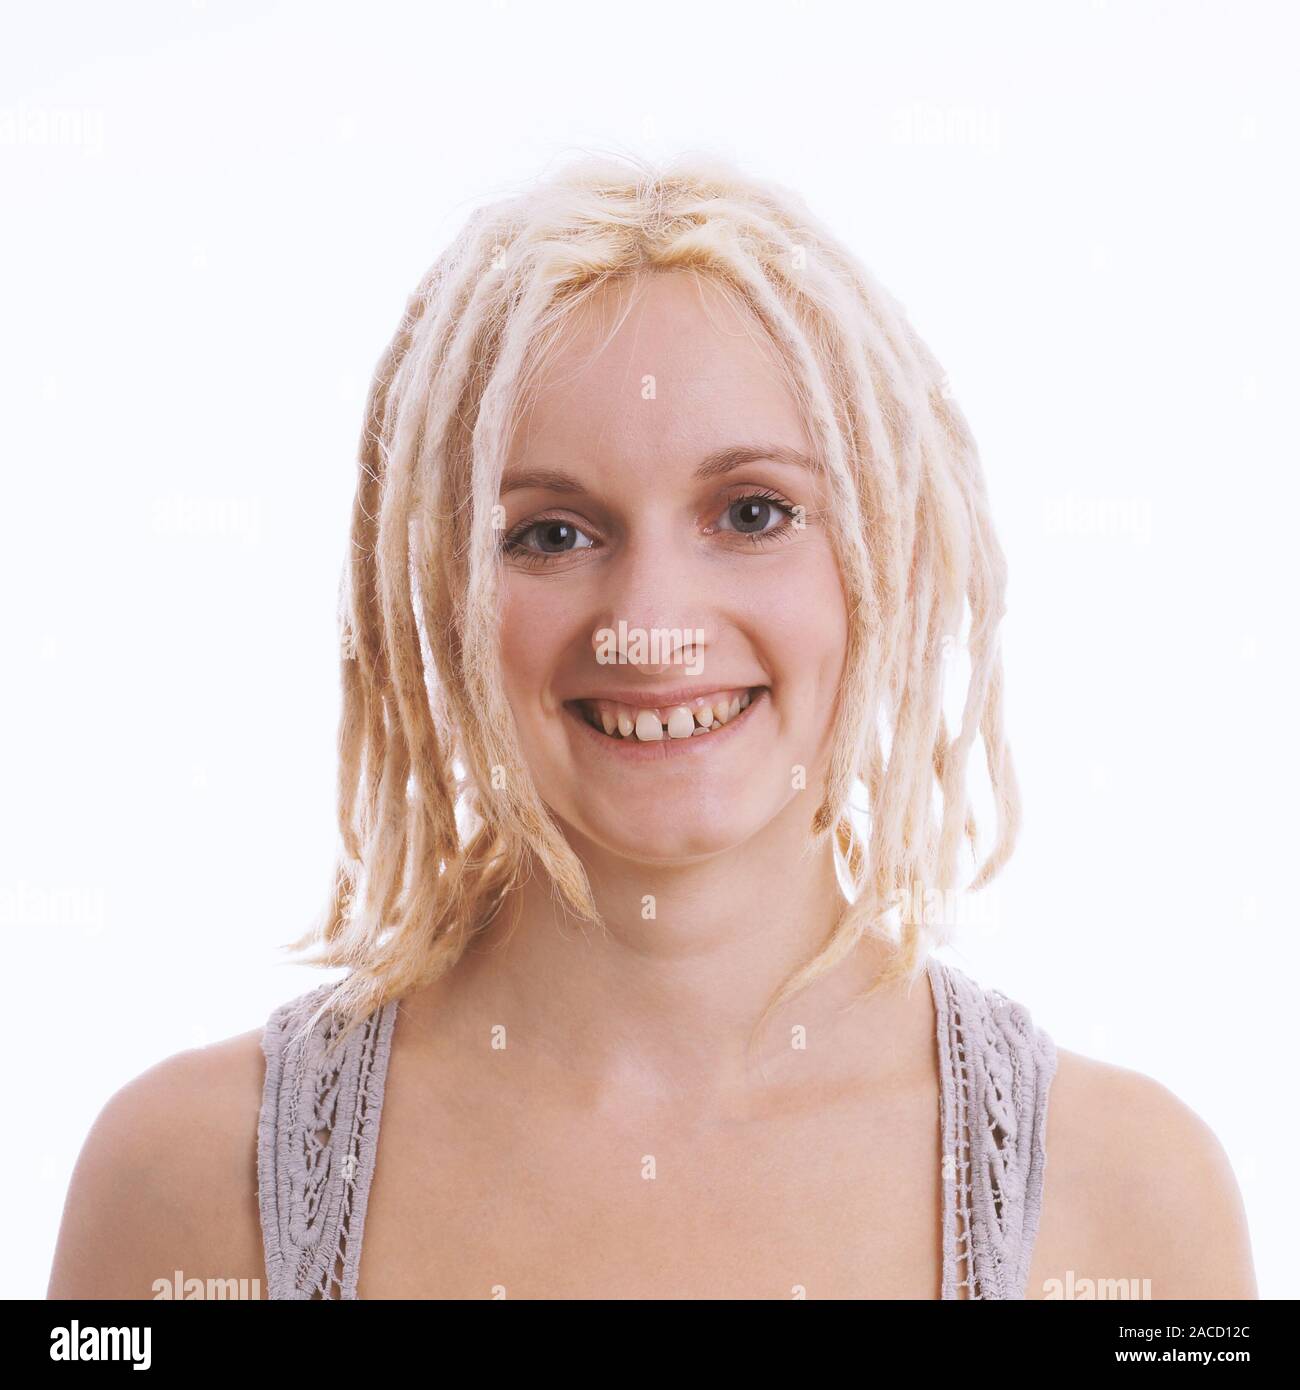 Happy smiling young woman with blonde dreadlocks et tooth gap - studio portrait contre fond blanc Banque D'Images